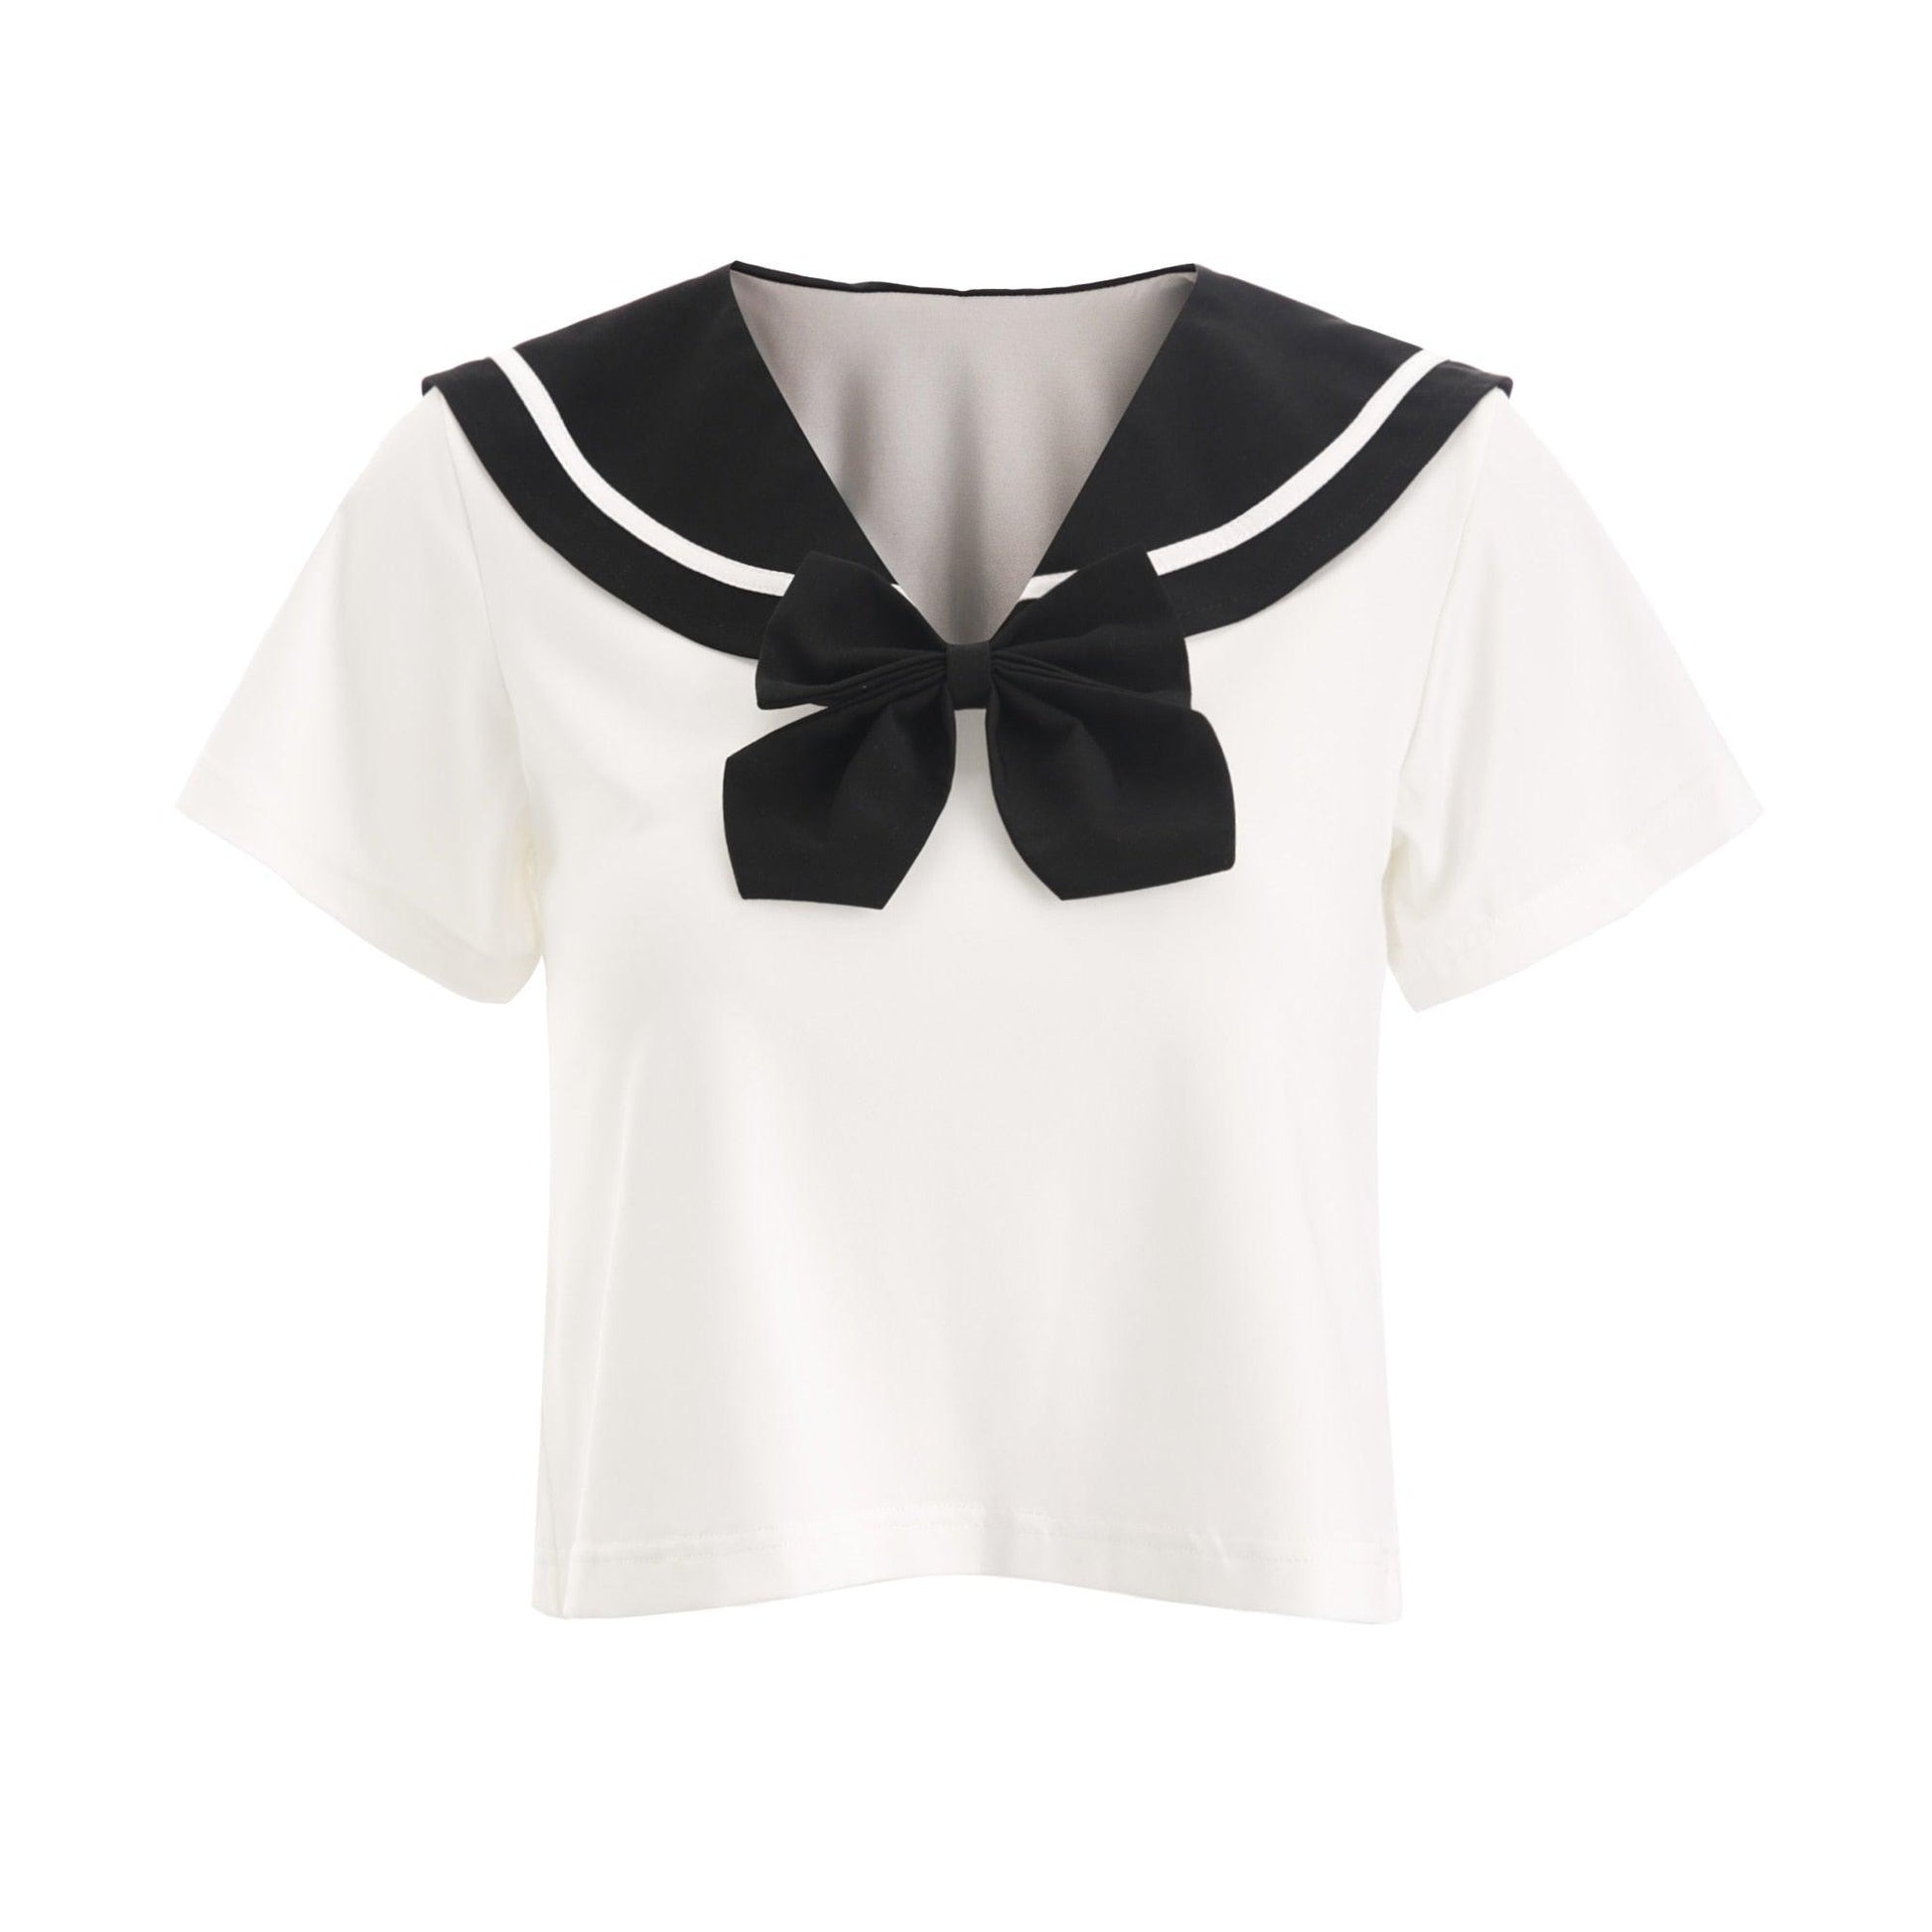 Japanese School Uniform w/ Short Skirt - Costume - Femboy Fatale